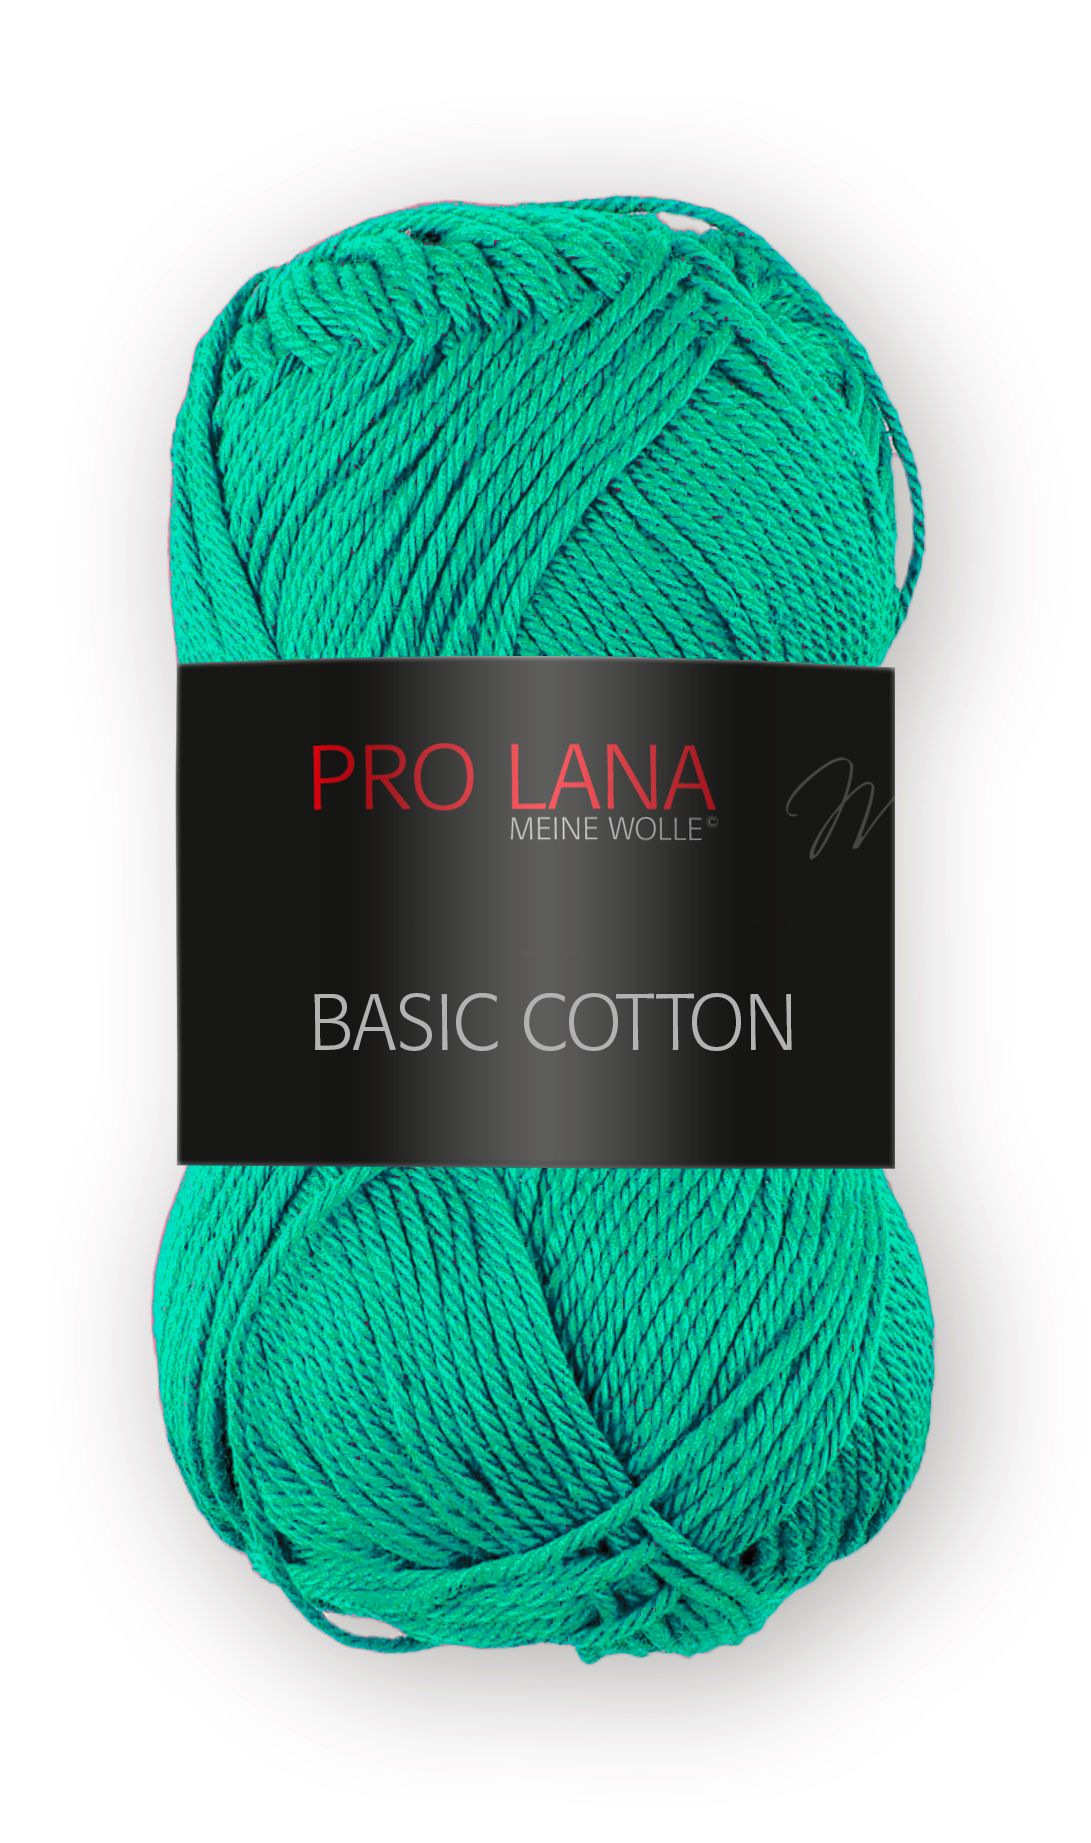 Pro Lana Basic Cotton 50g - Dunkelmint 70